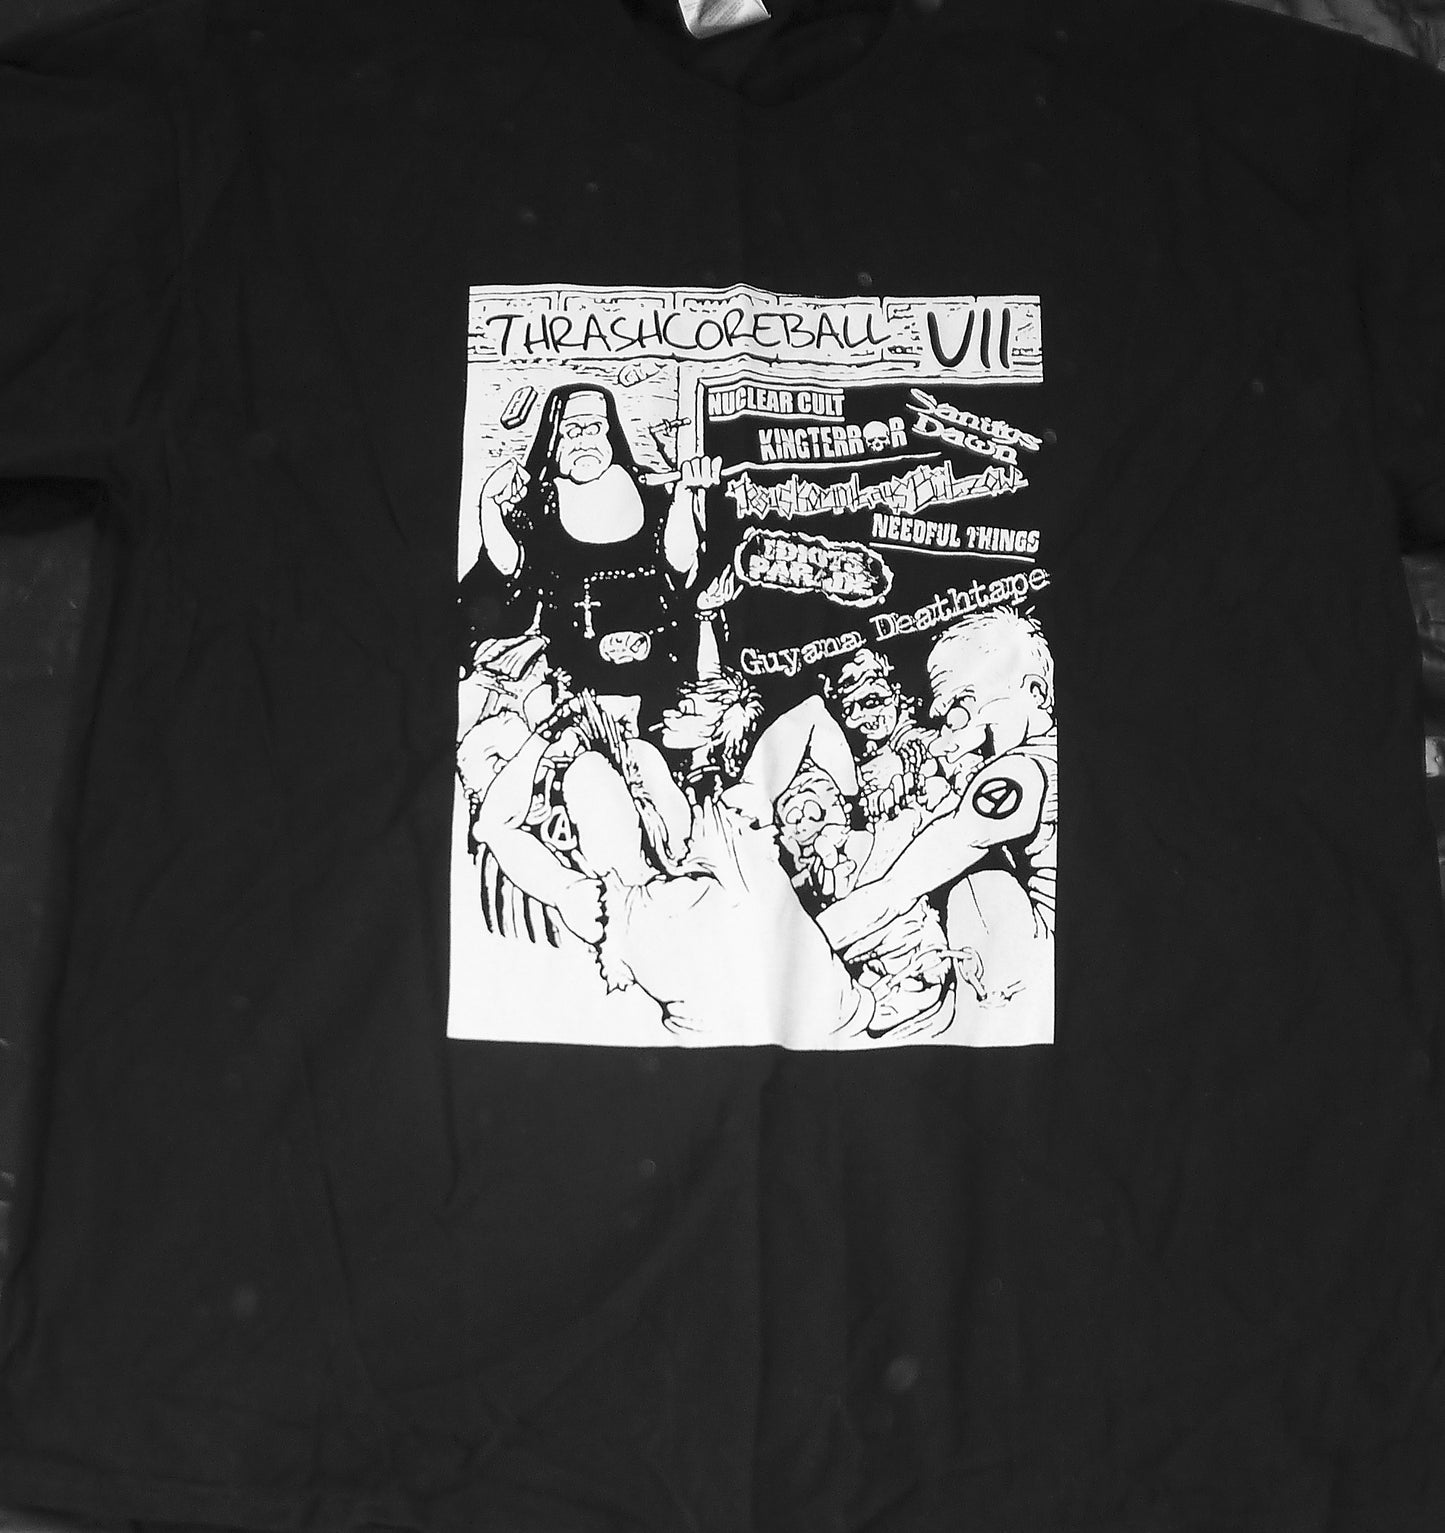 THRASHCOREBALL VII FEST. - T-shirt